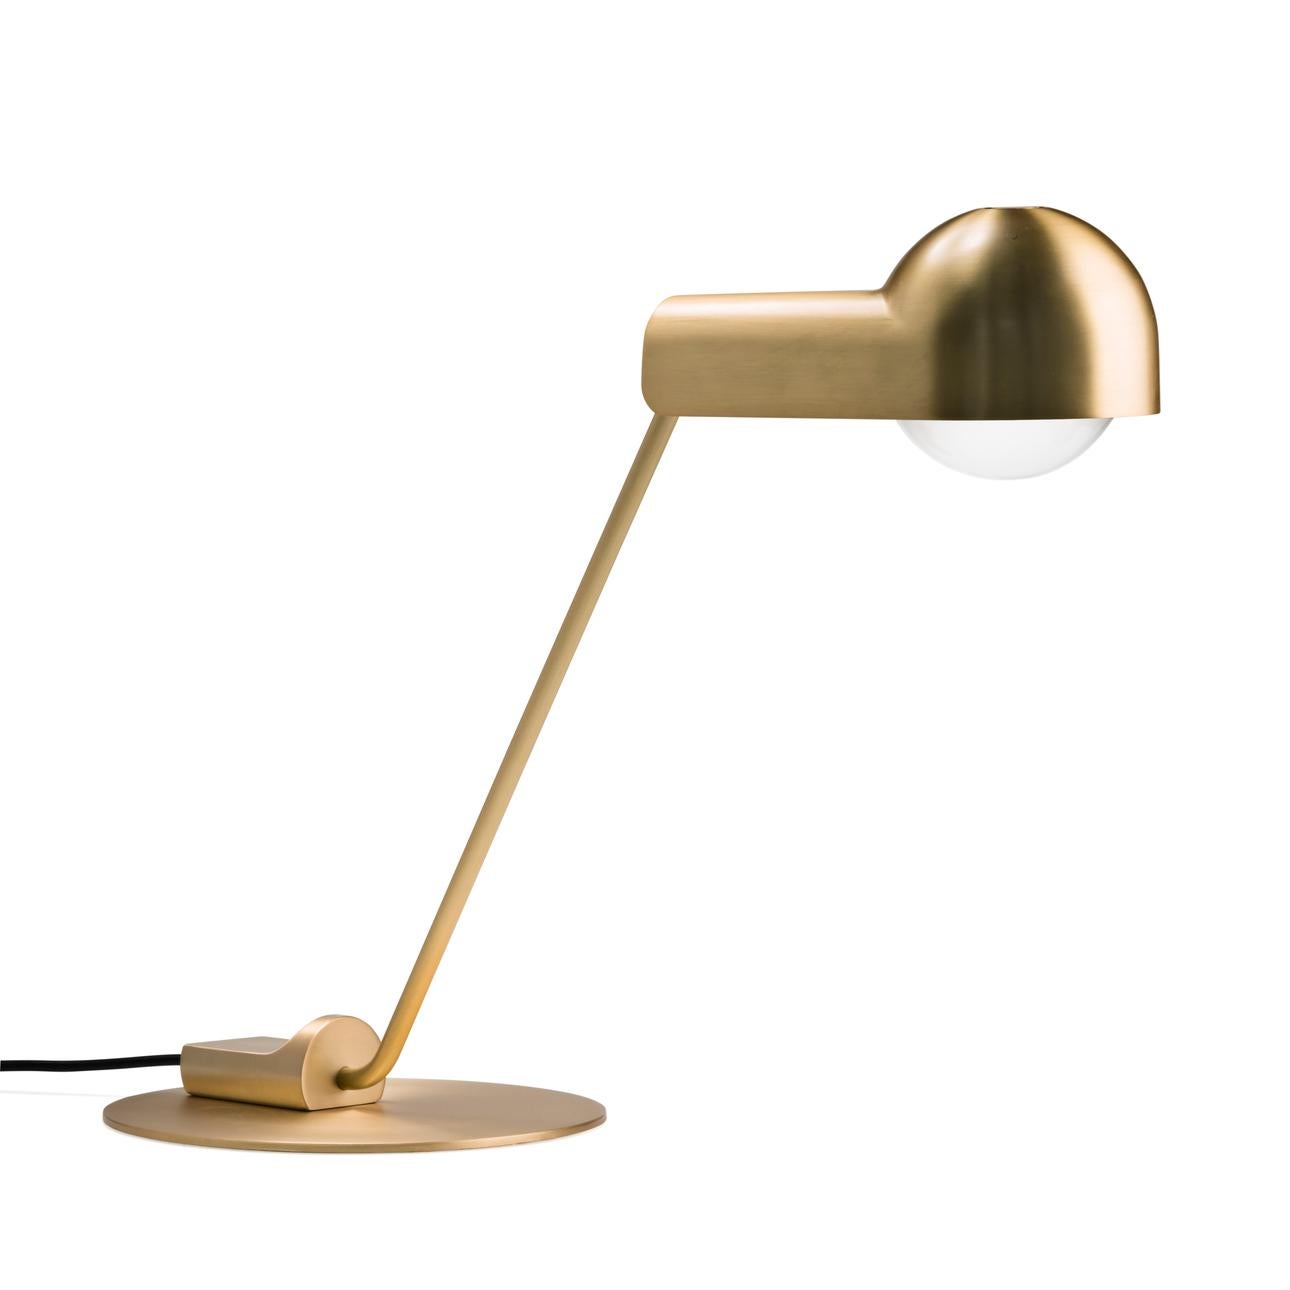 Danish Joe Colombo 'Domo' Brass Table Lamp by Karakter